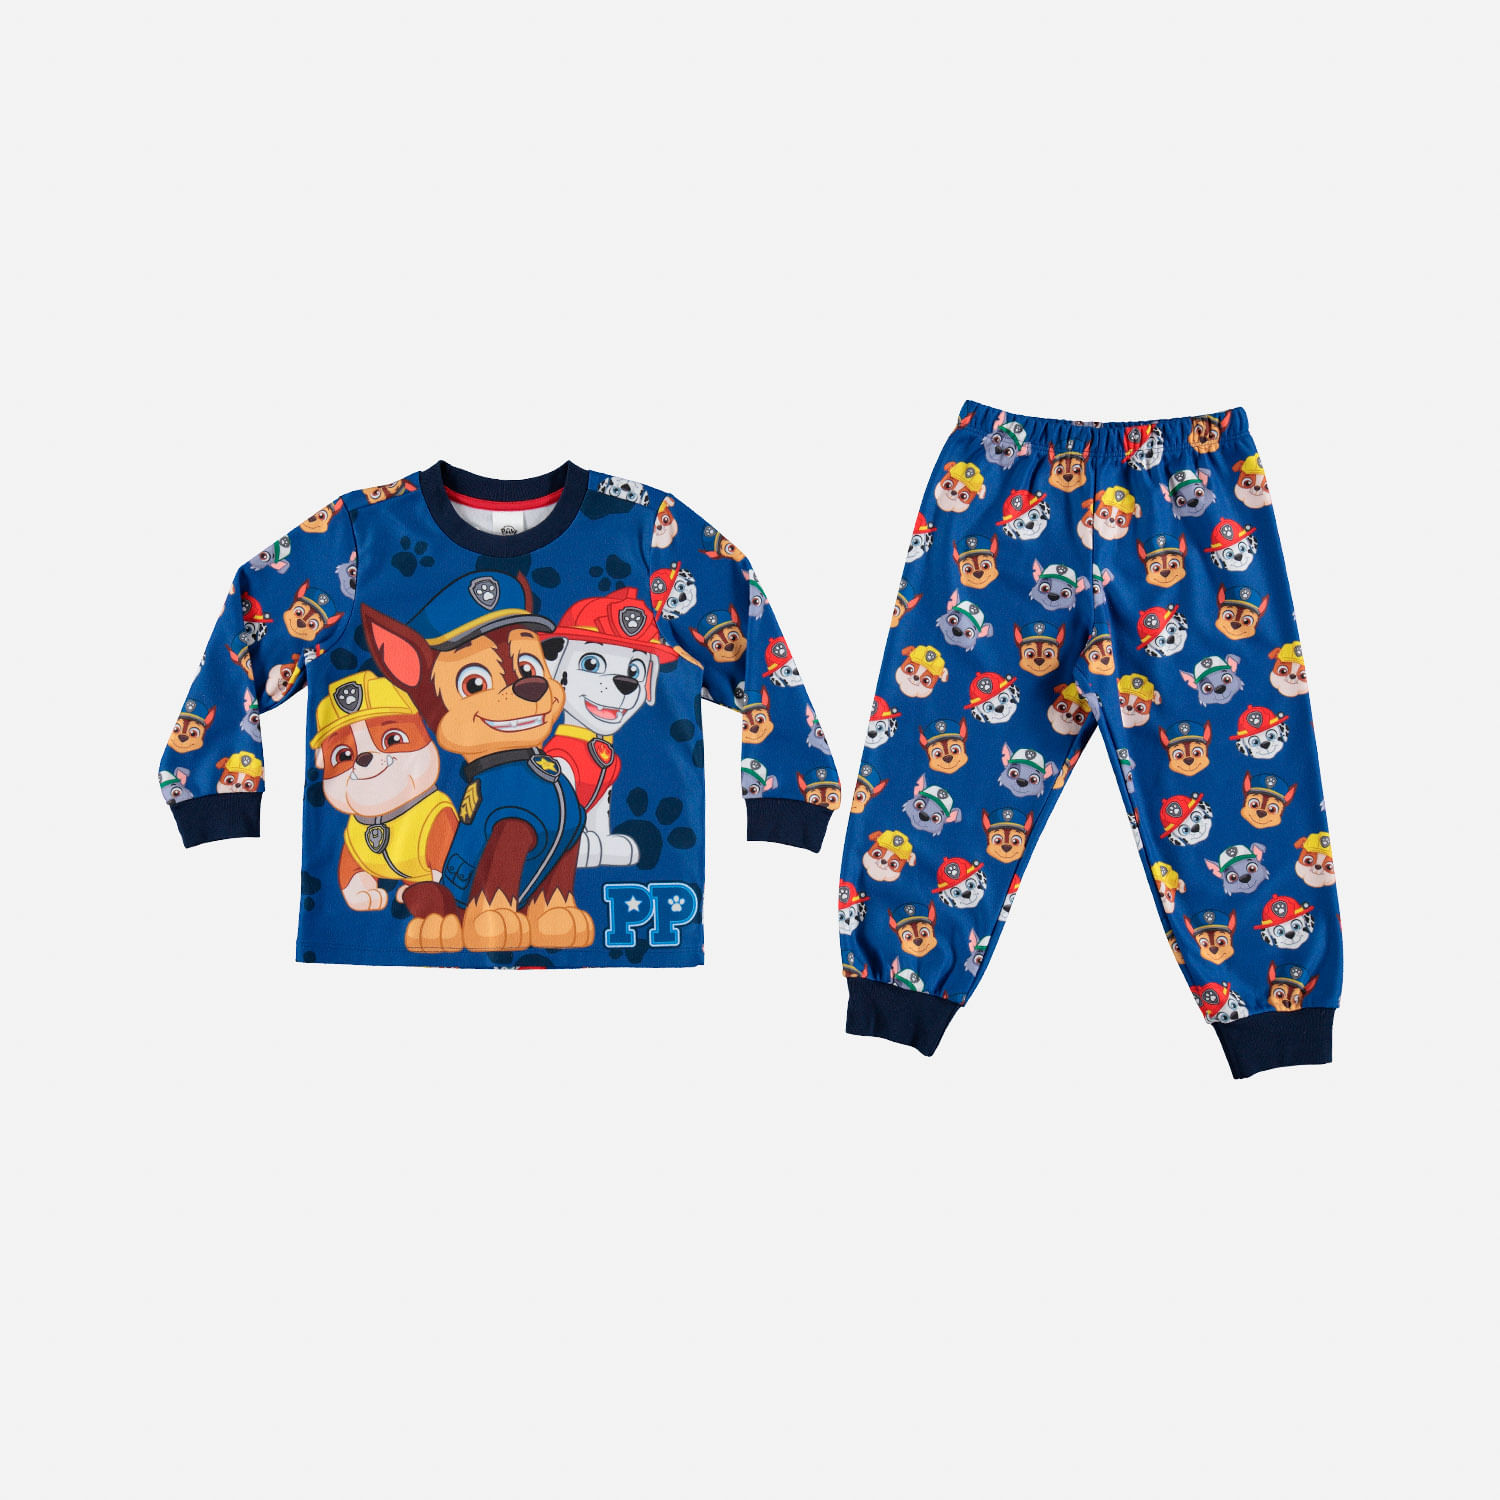 Pijama de Paw Patrol para niño, manga larga y pantalón largo de LittleMIC.